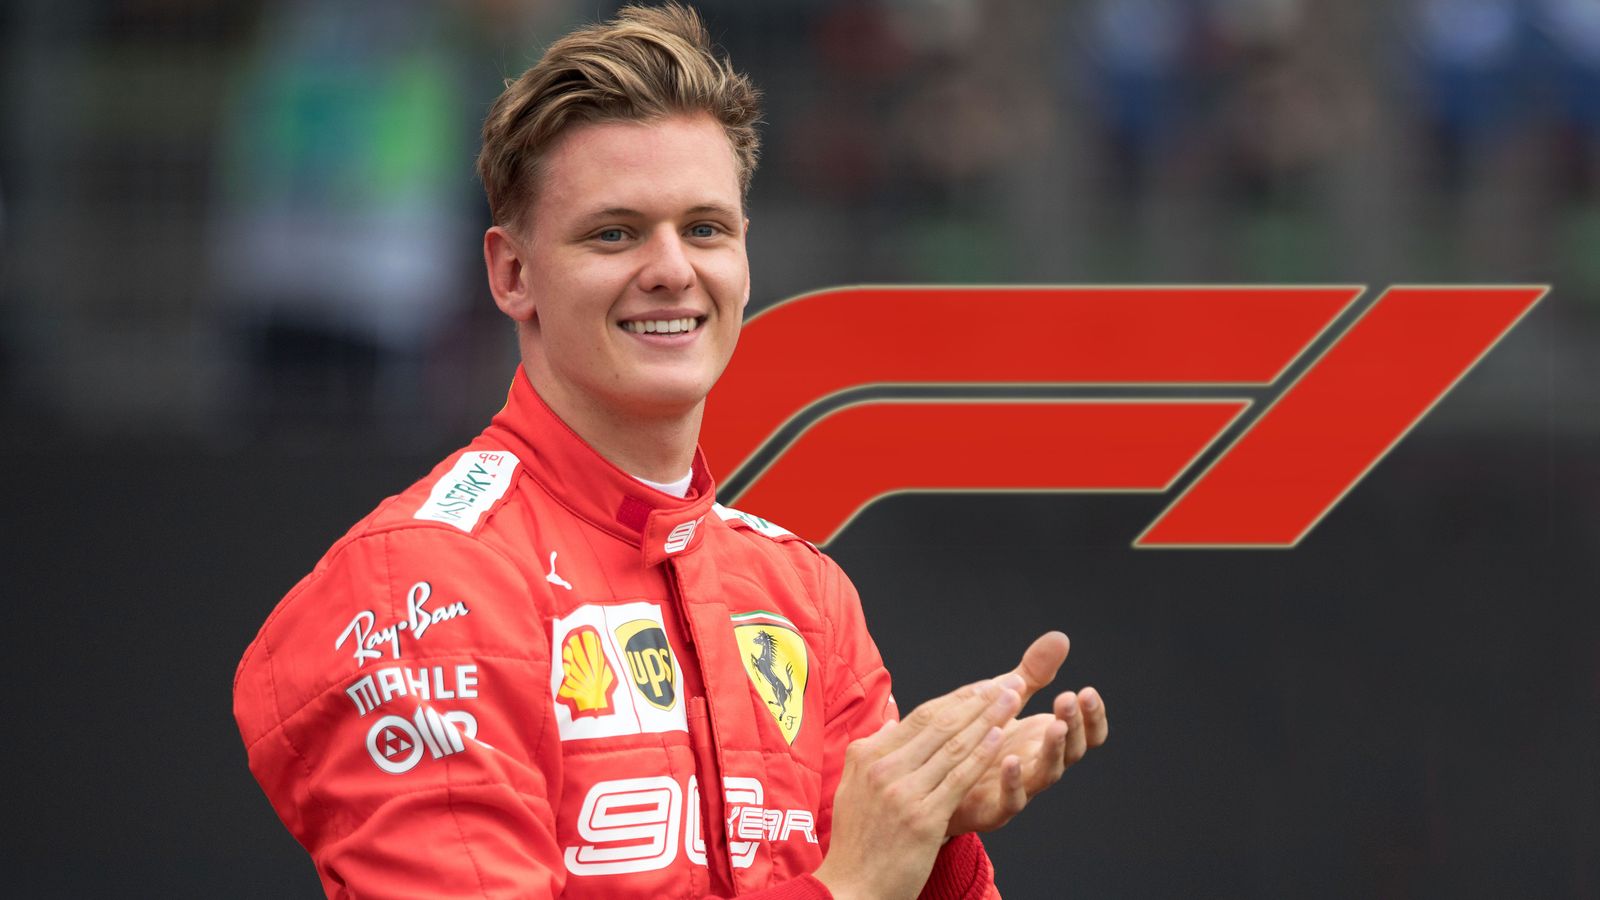 Schumacher Michael 2021